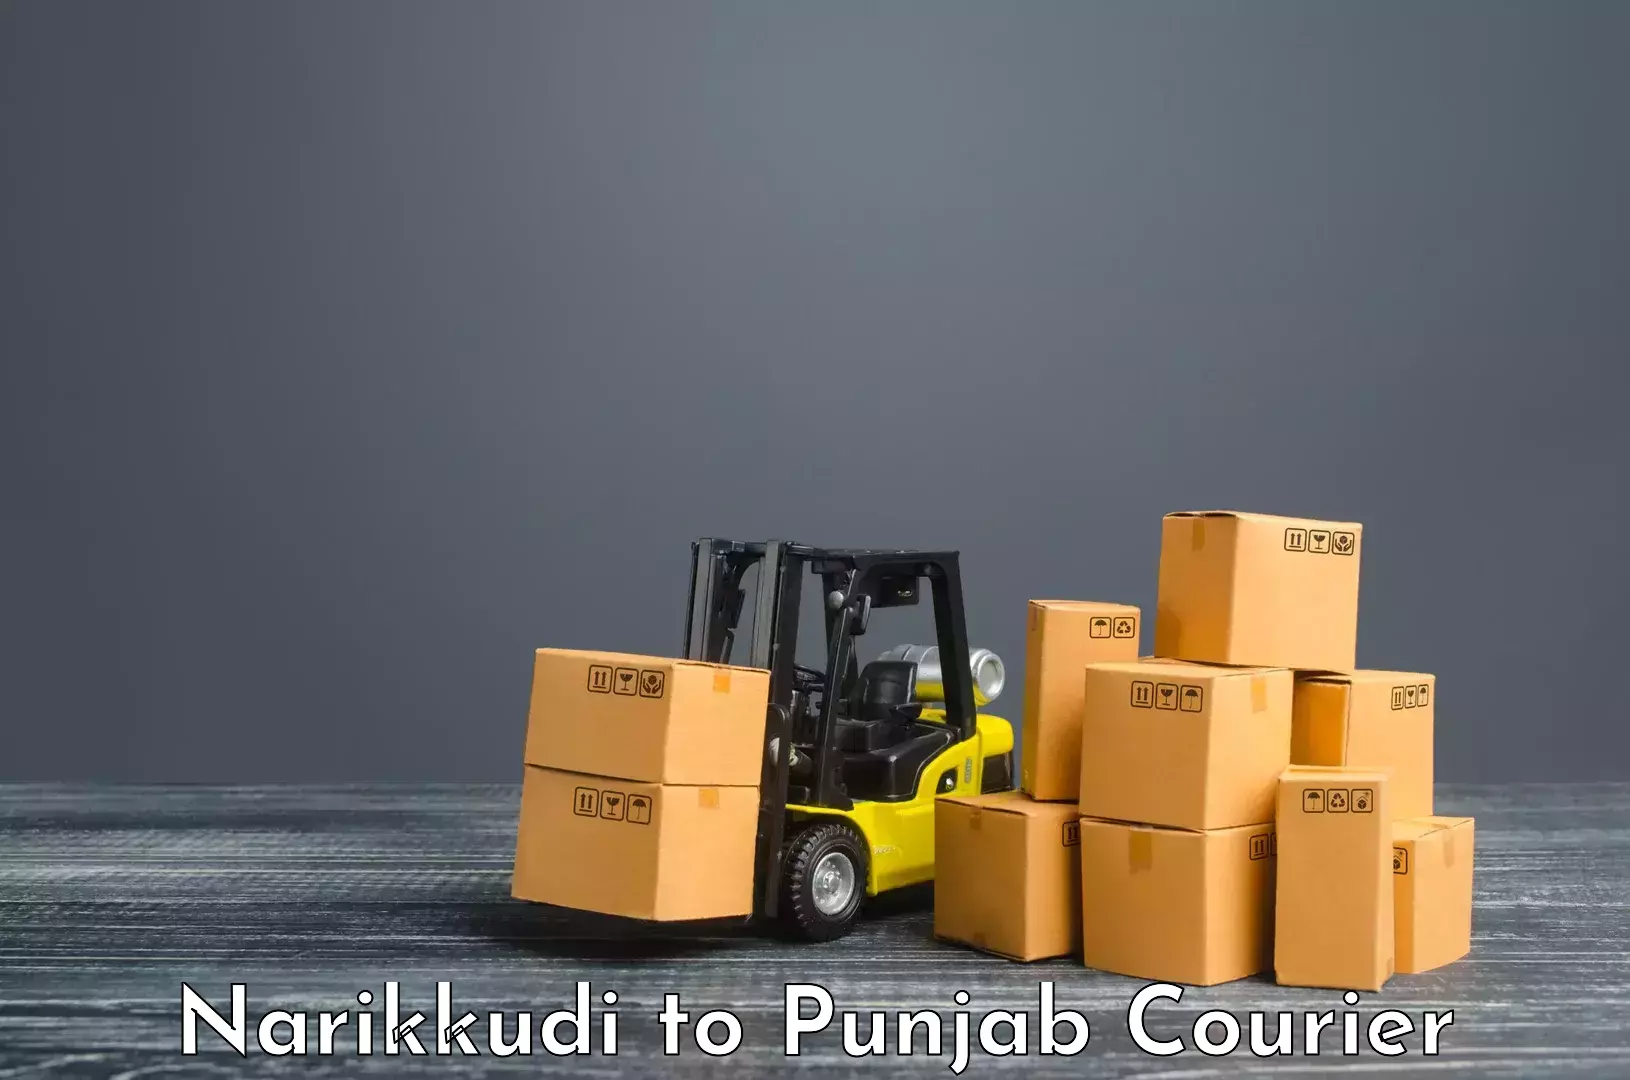 Global freight services Narikkudi to Amritsar